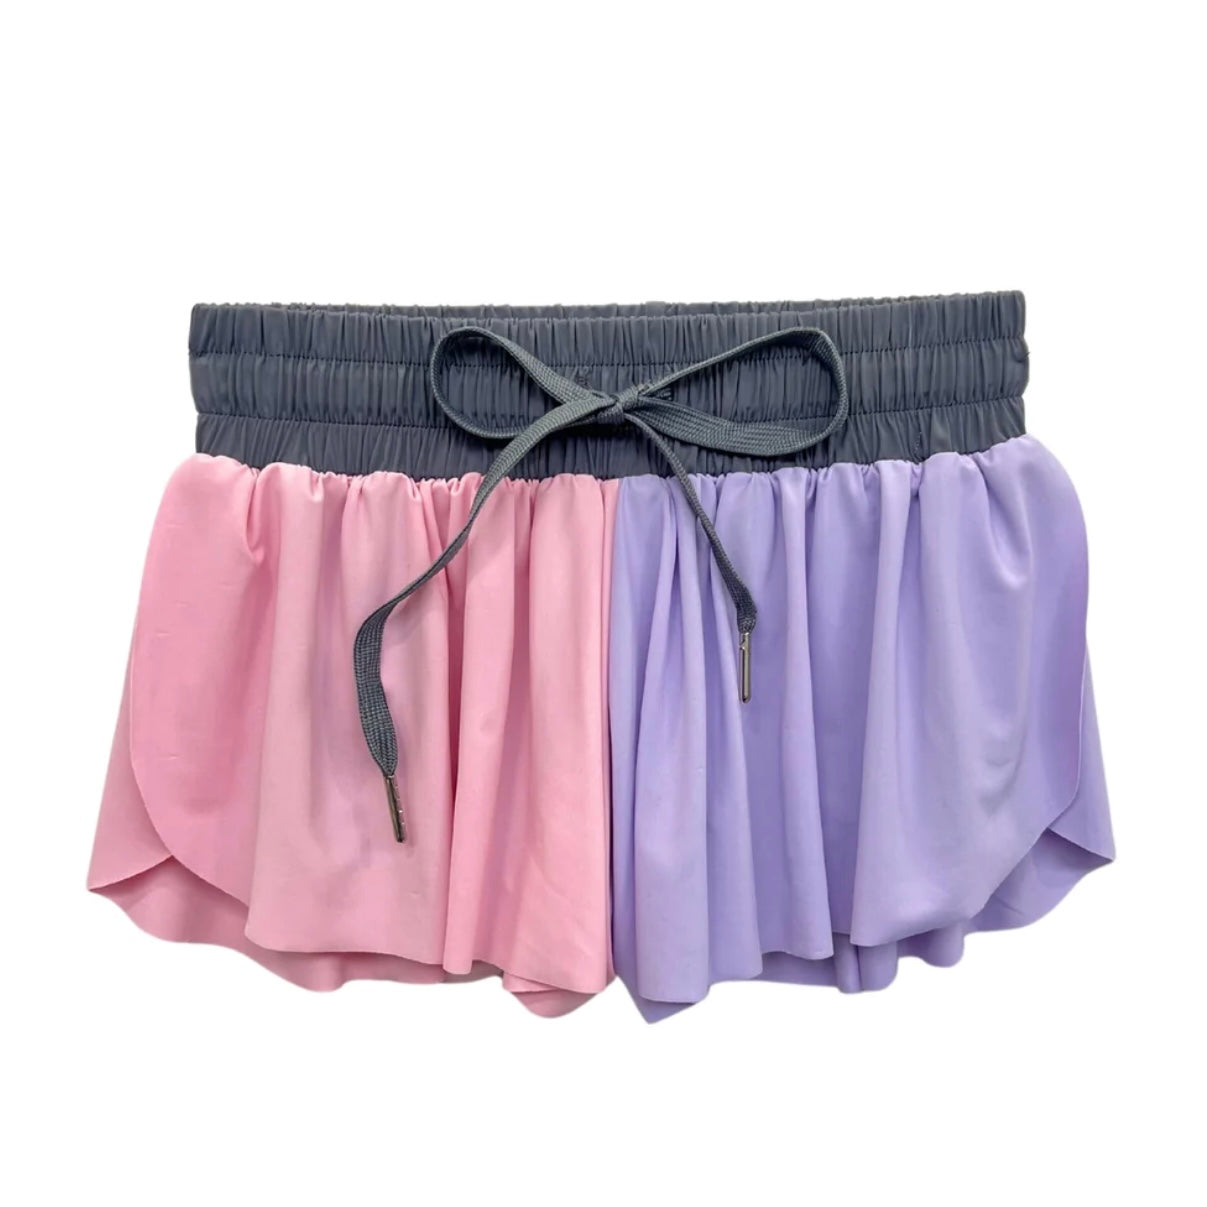 Katie J NYC  Girls Tween Farrah Shorts - Pastel Colorblock